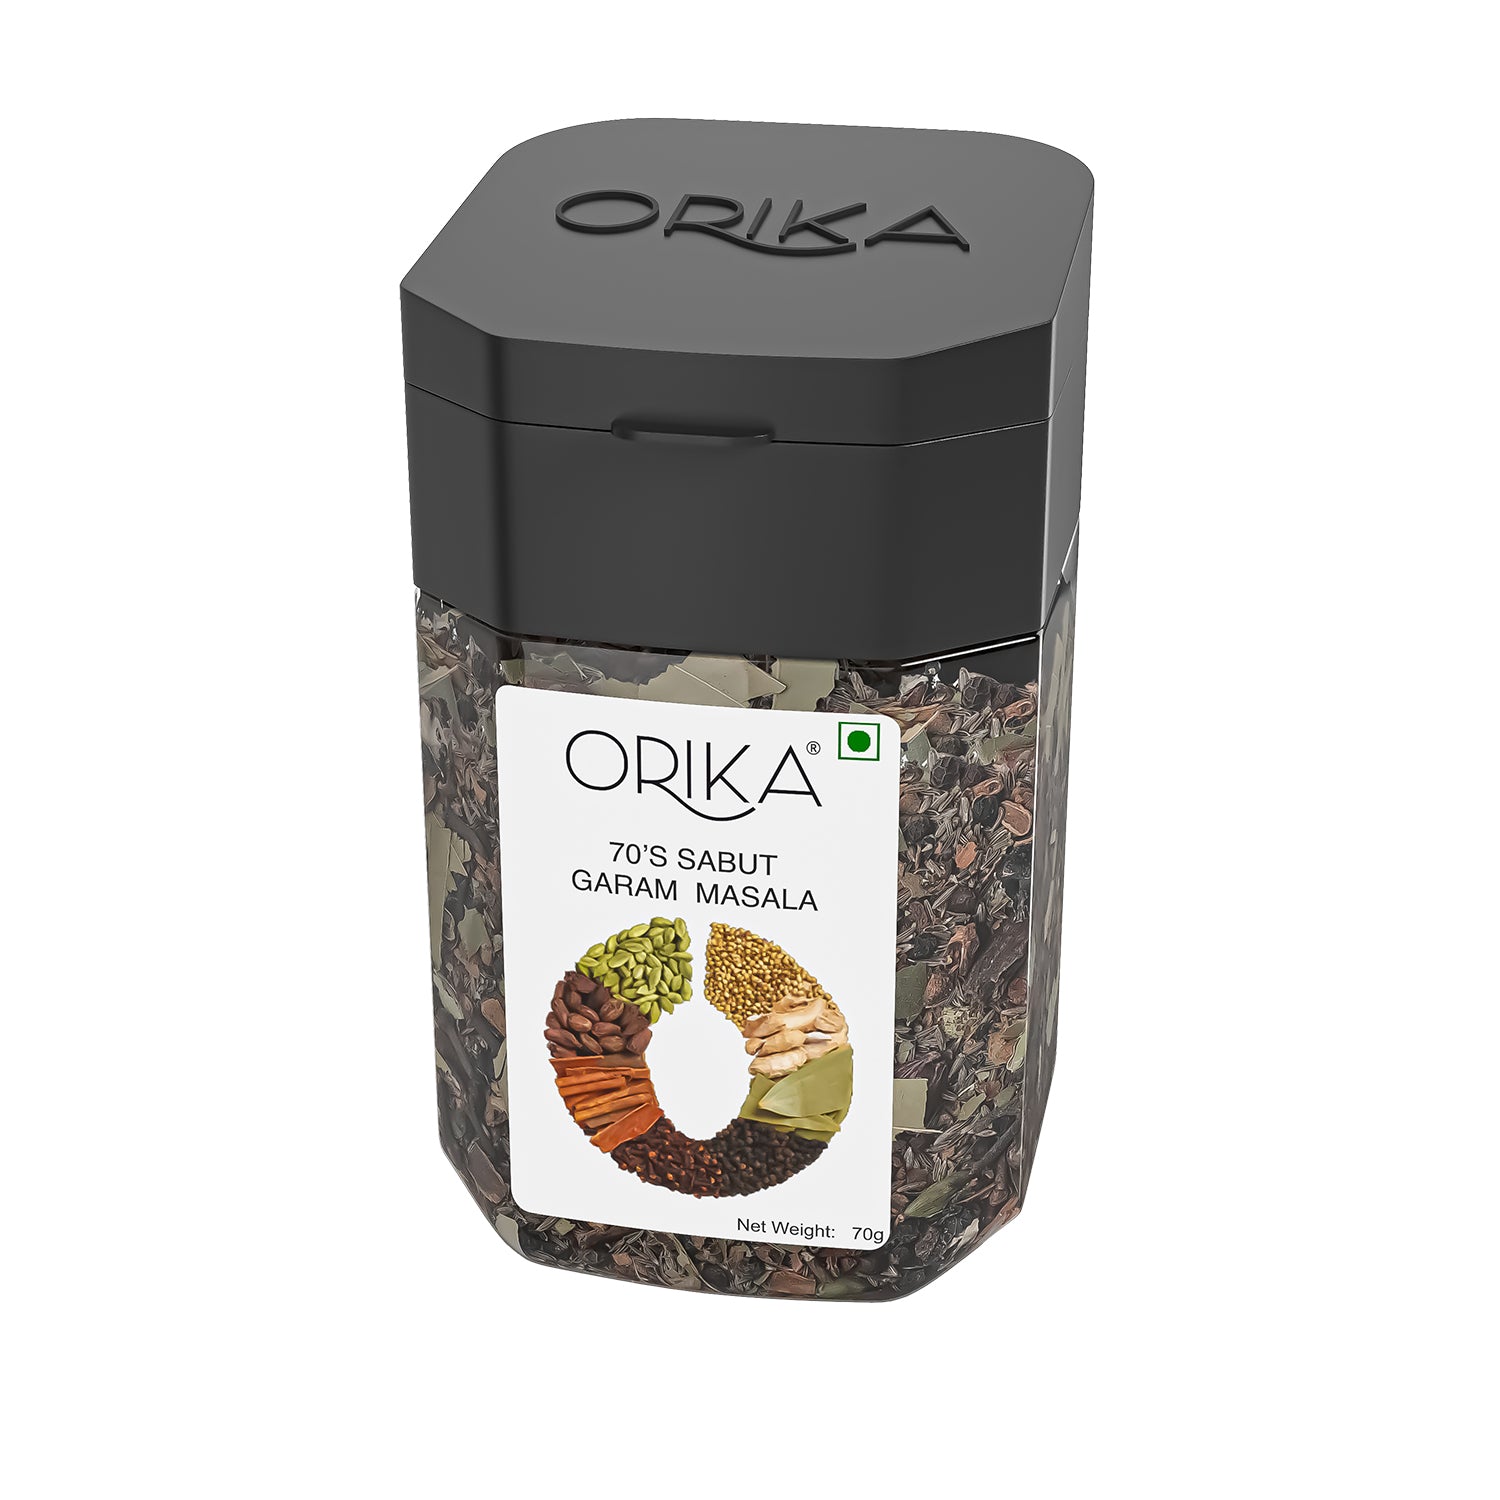 Orika's 70's Sabut Garam Masala, 70g - Orika Spices India